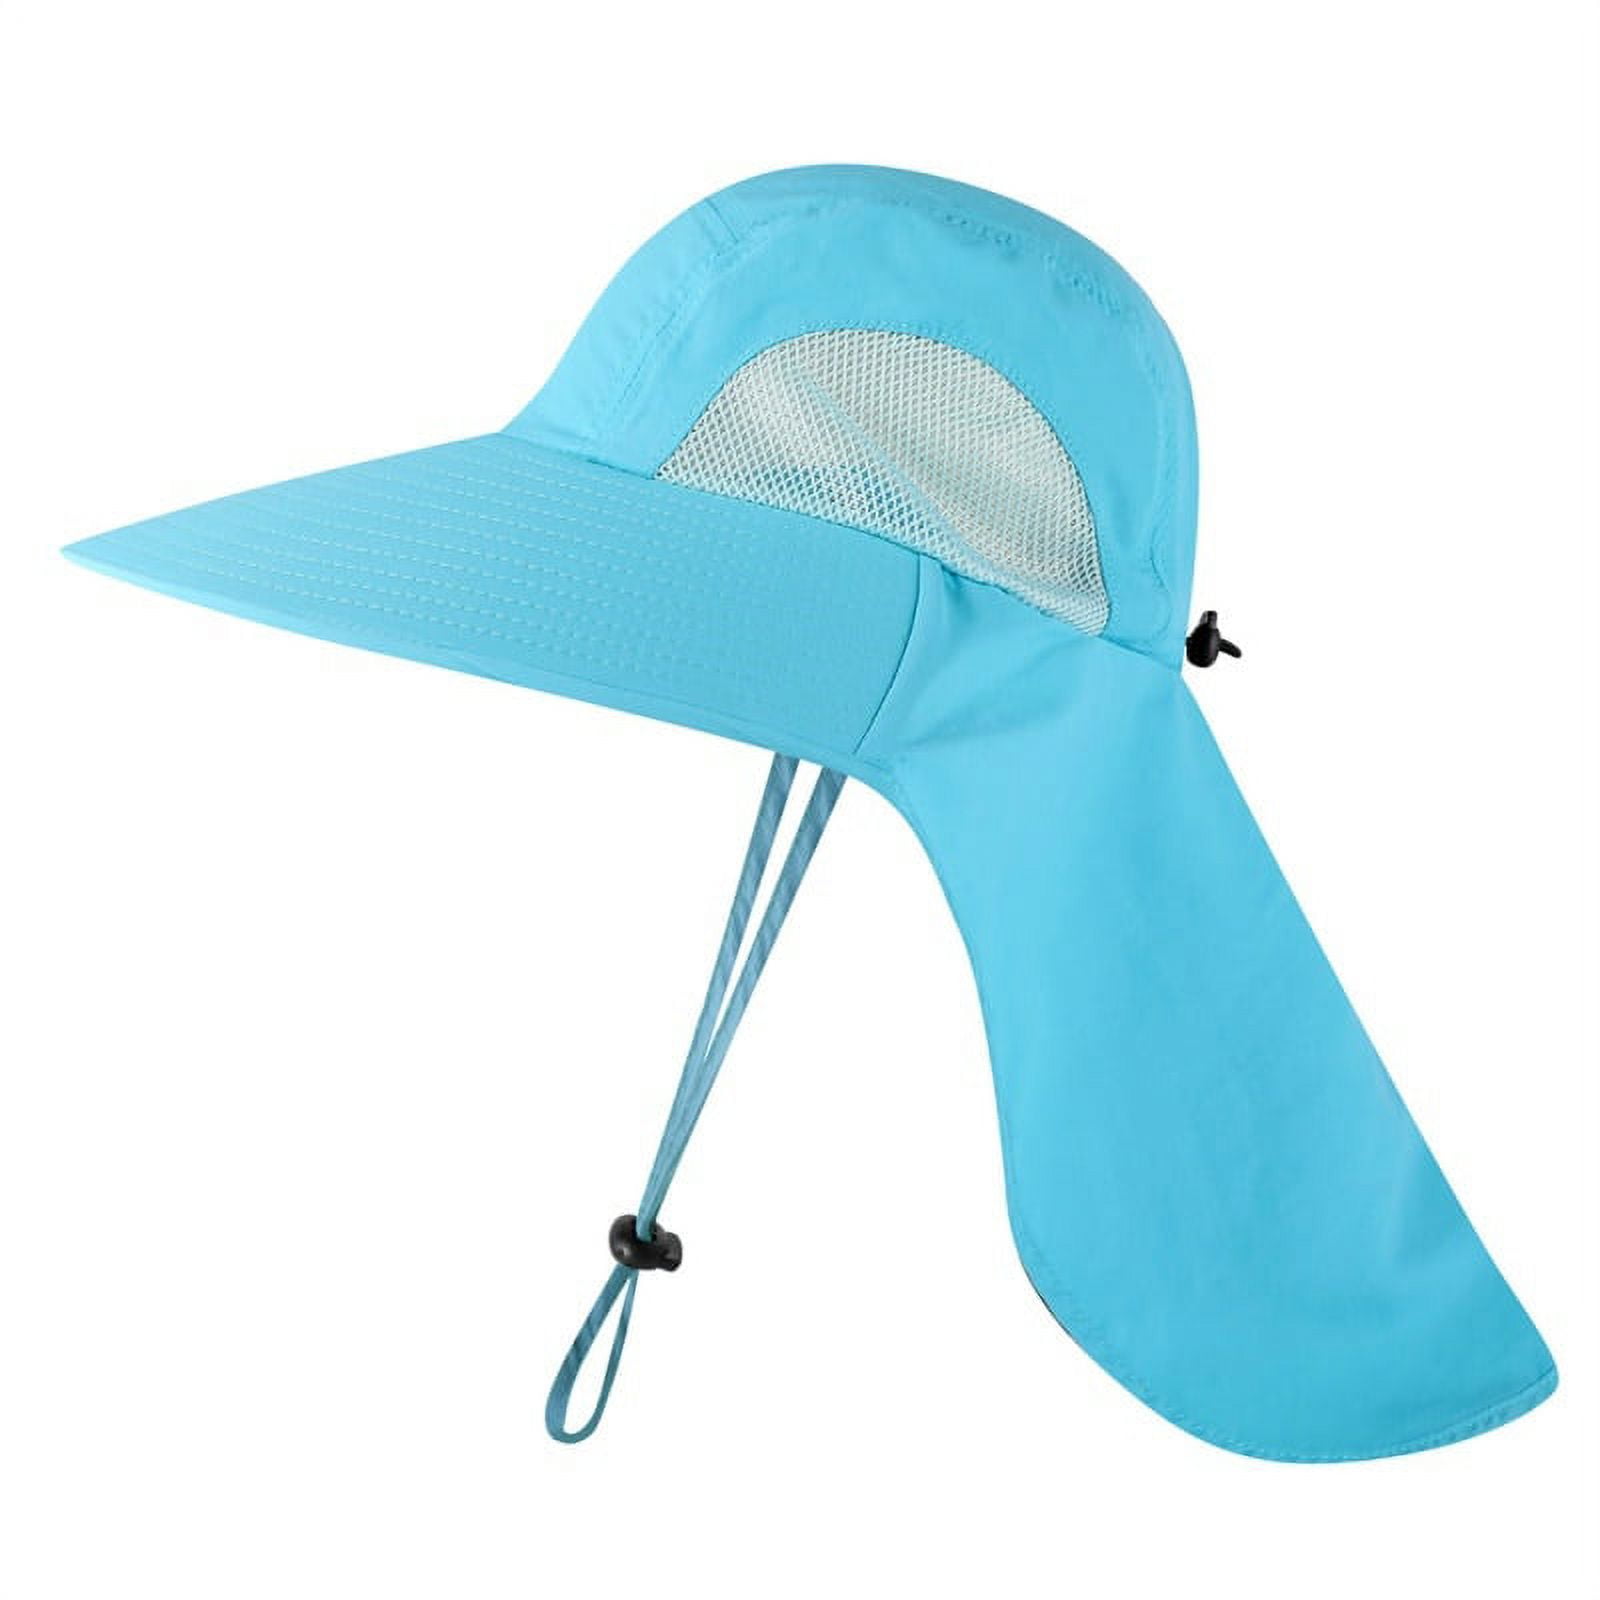 Home Prefer Outdoor UPF50+ Mesh Sun Hat Fishing Hat Safari Cap